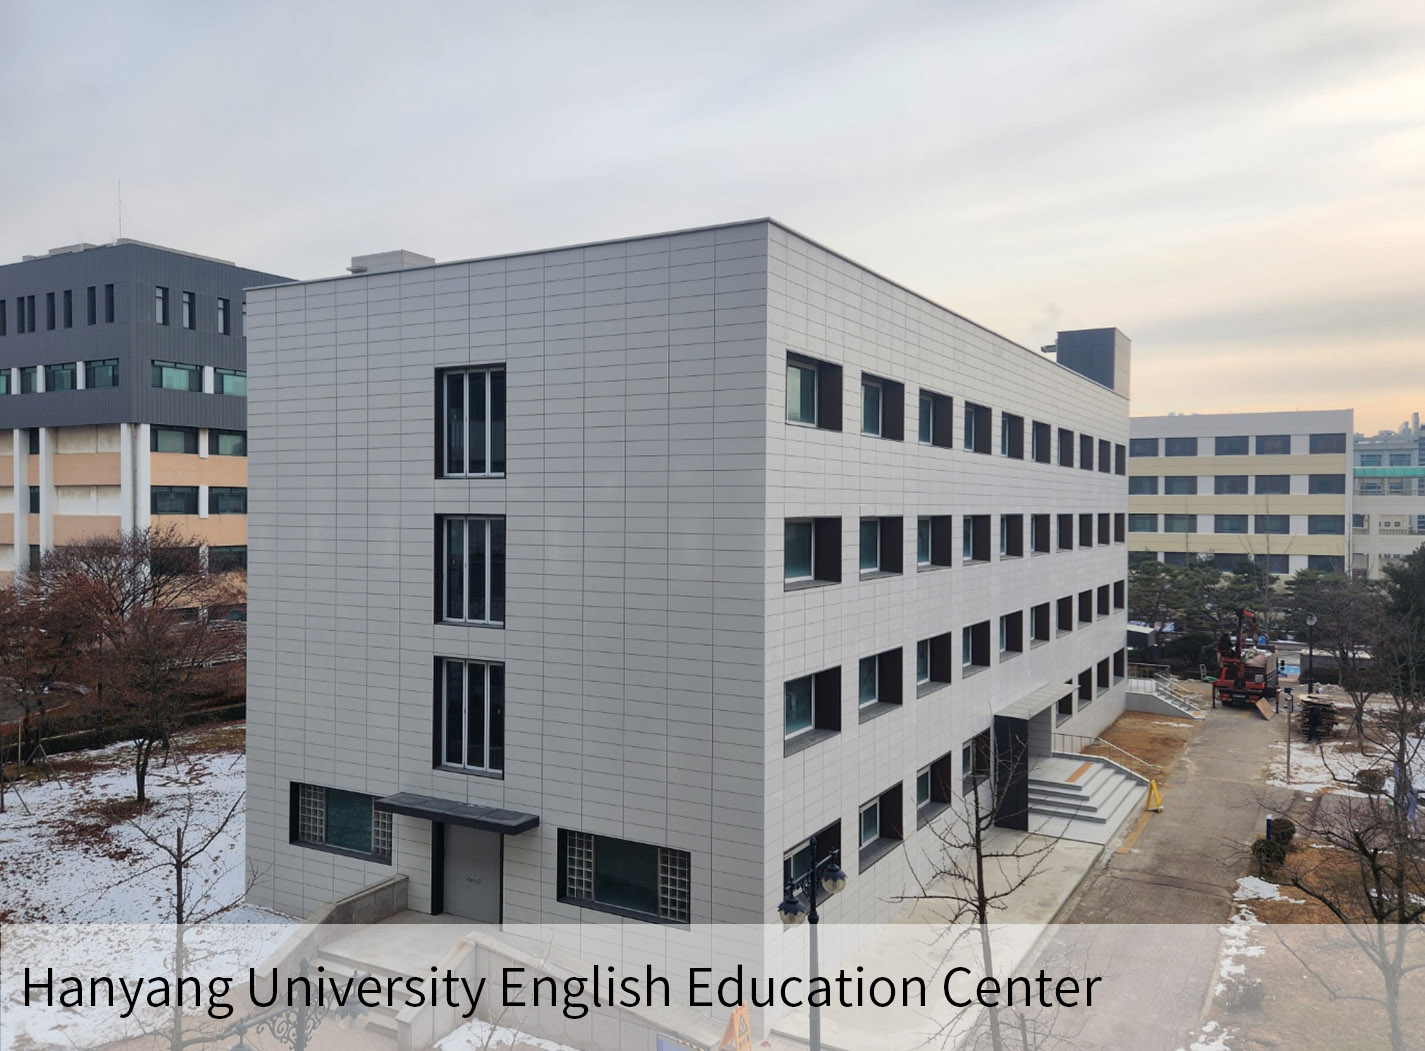 Hanyang University English Education Center, Korea